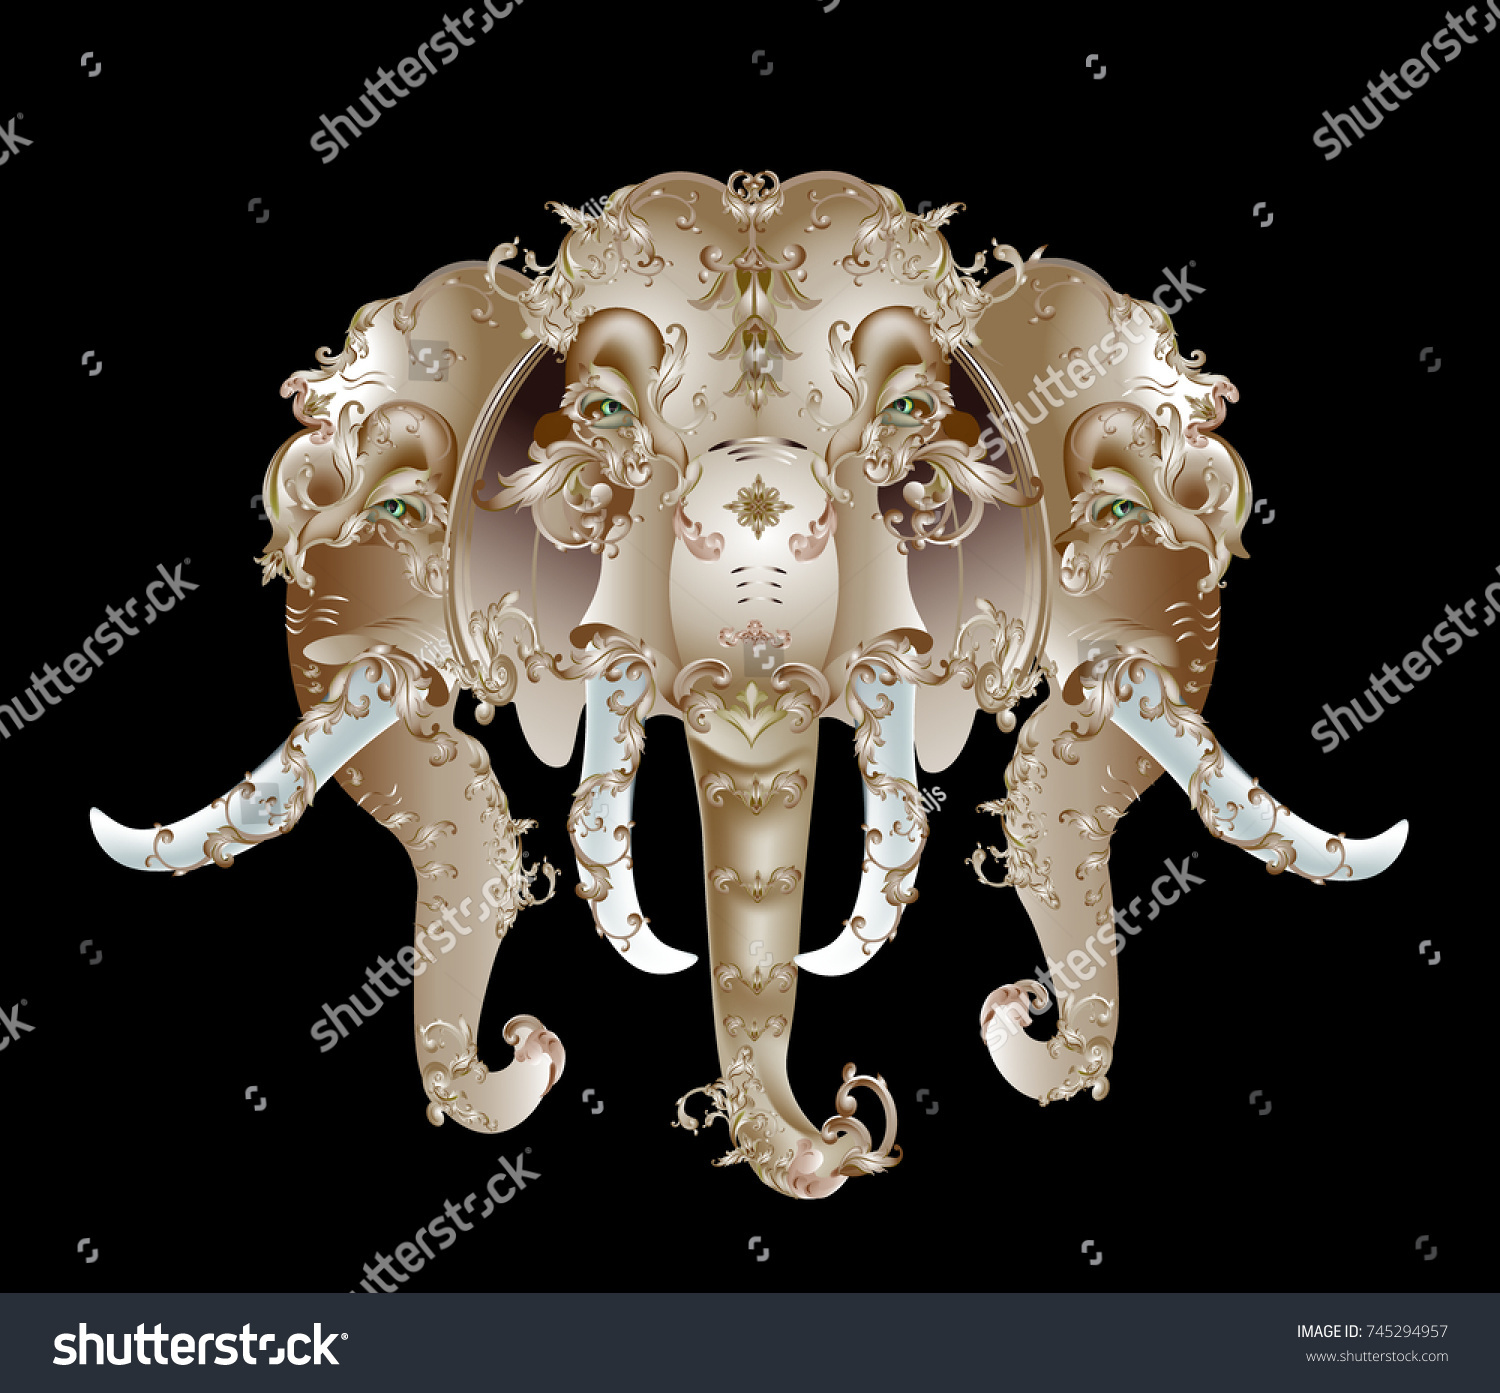 SVG of 3 head elephant svg